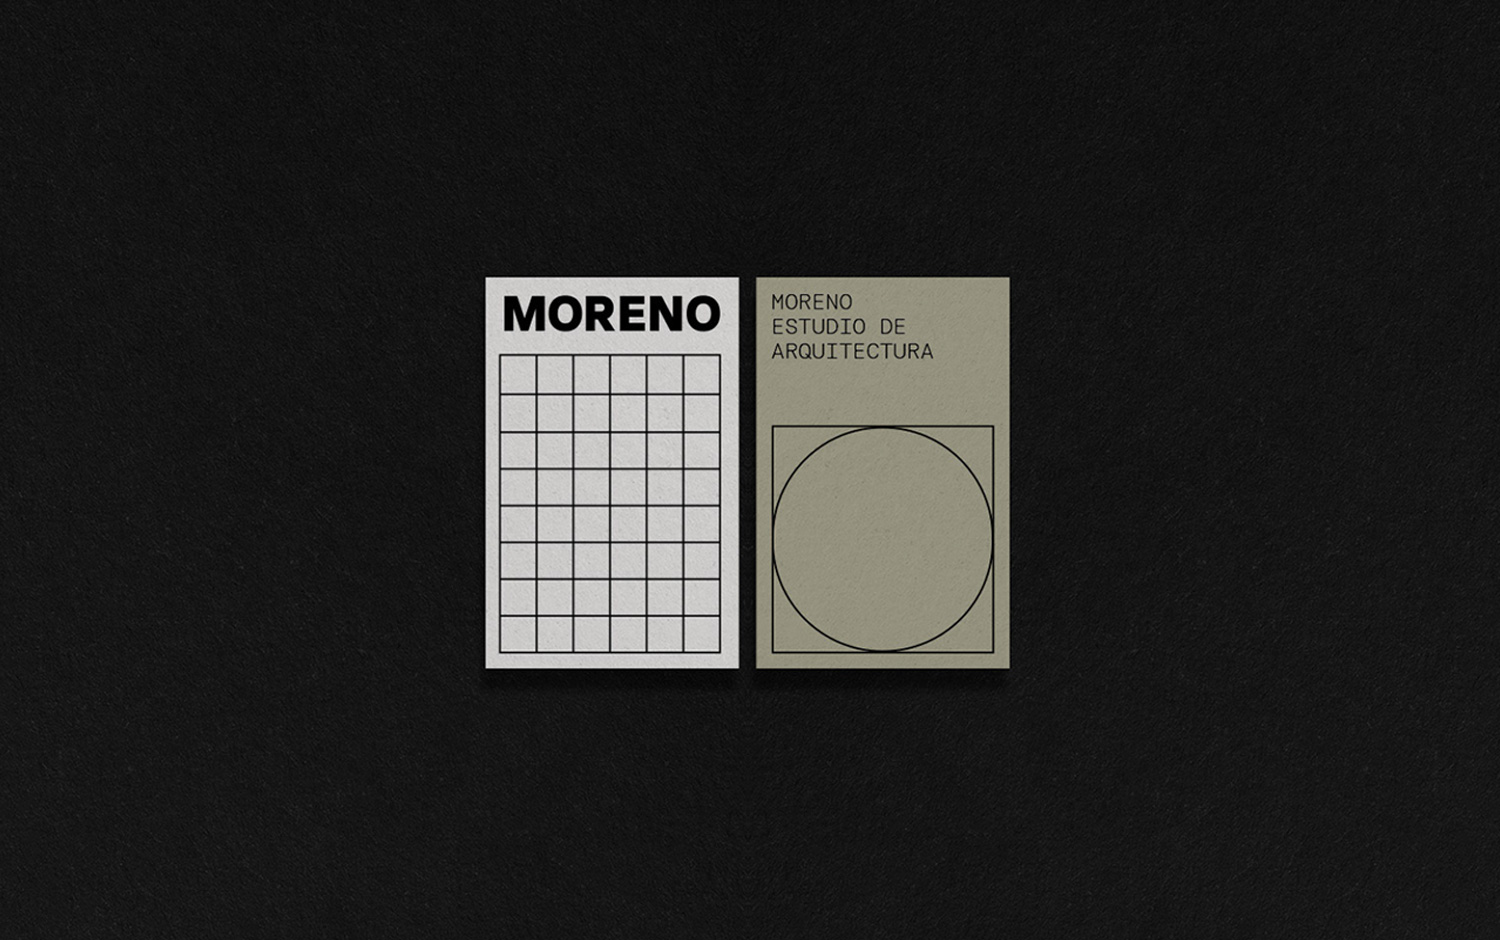 Moreno建筑事务所品牌VI设计